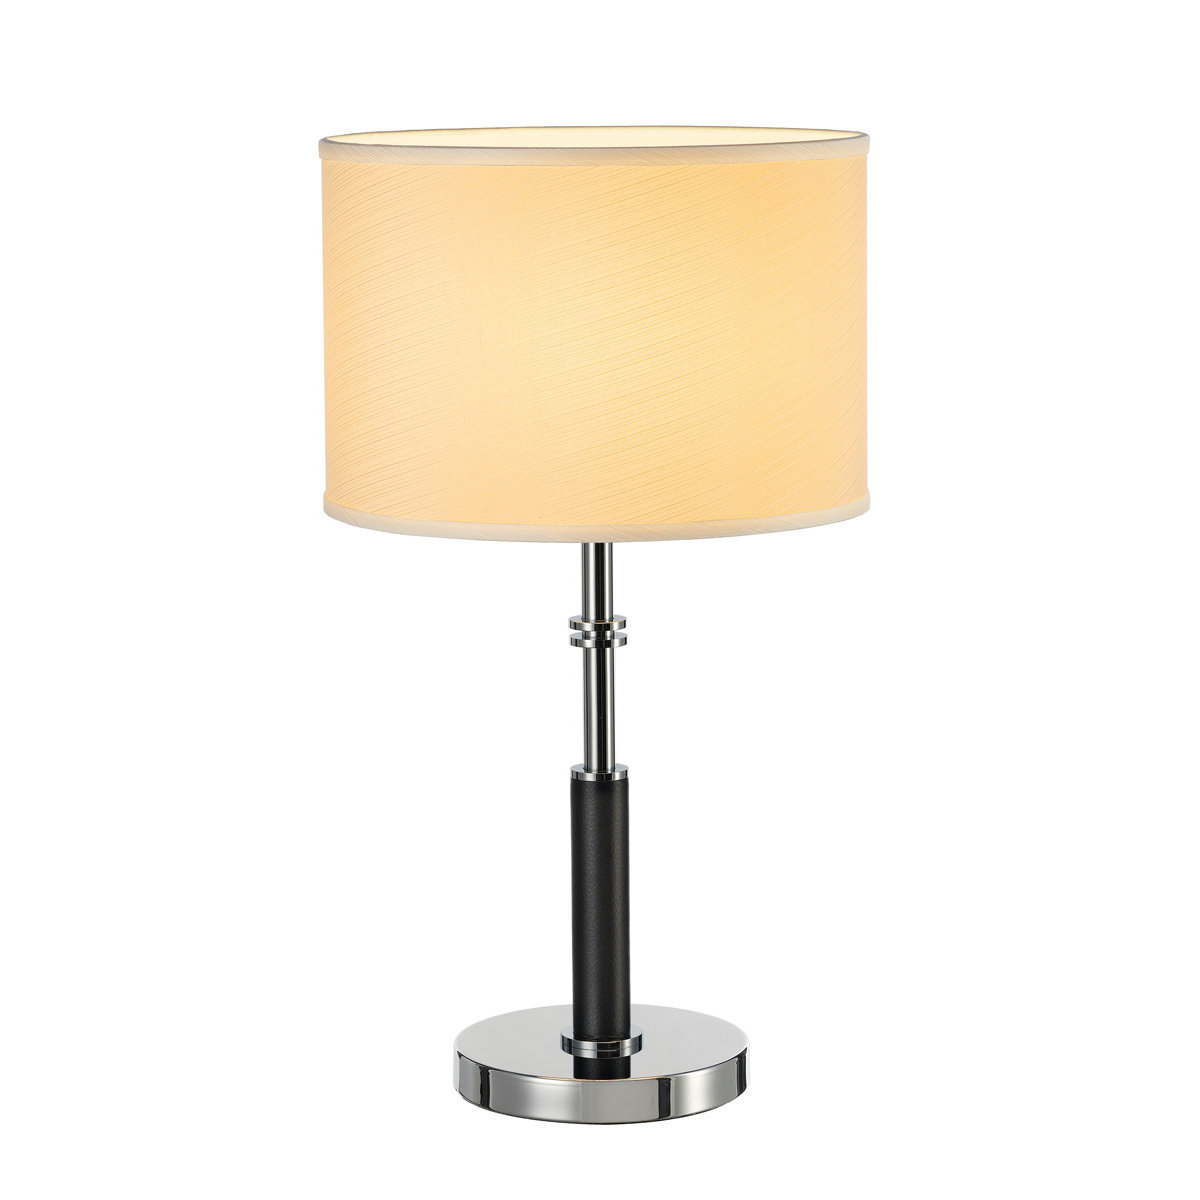 Soprana table lamp